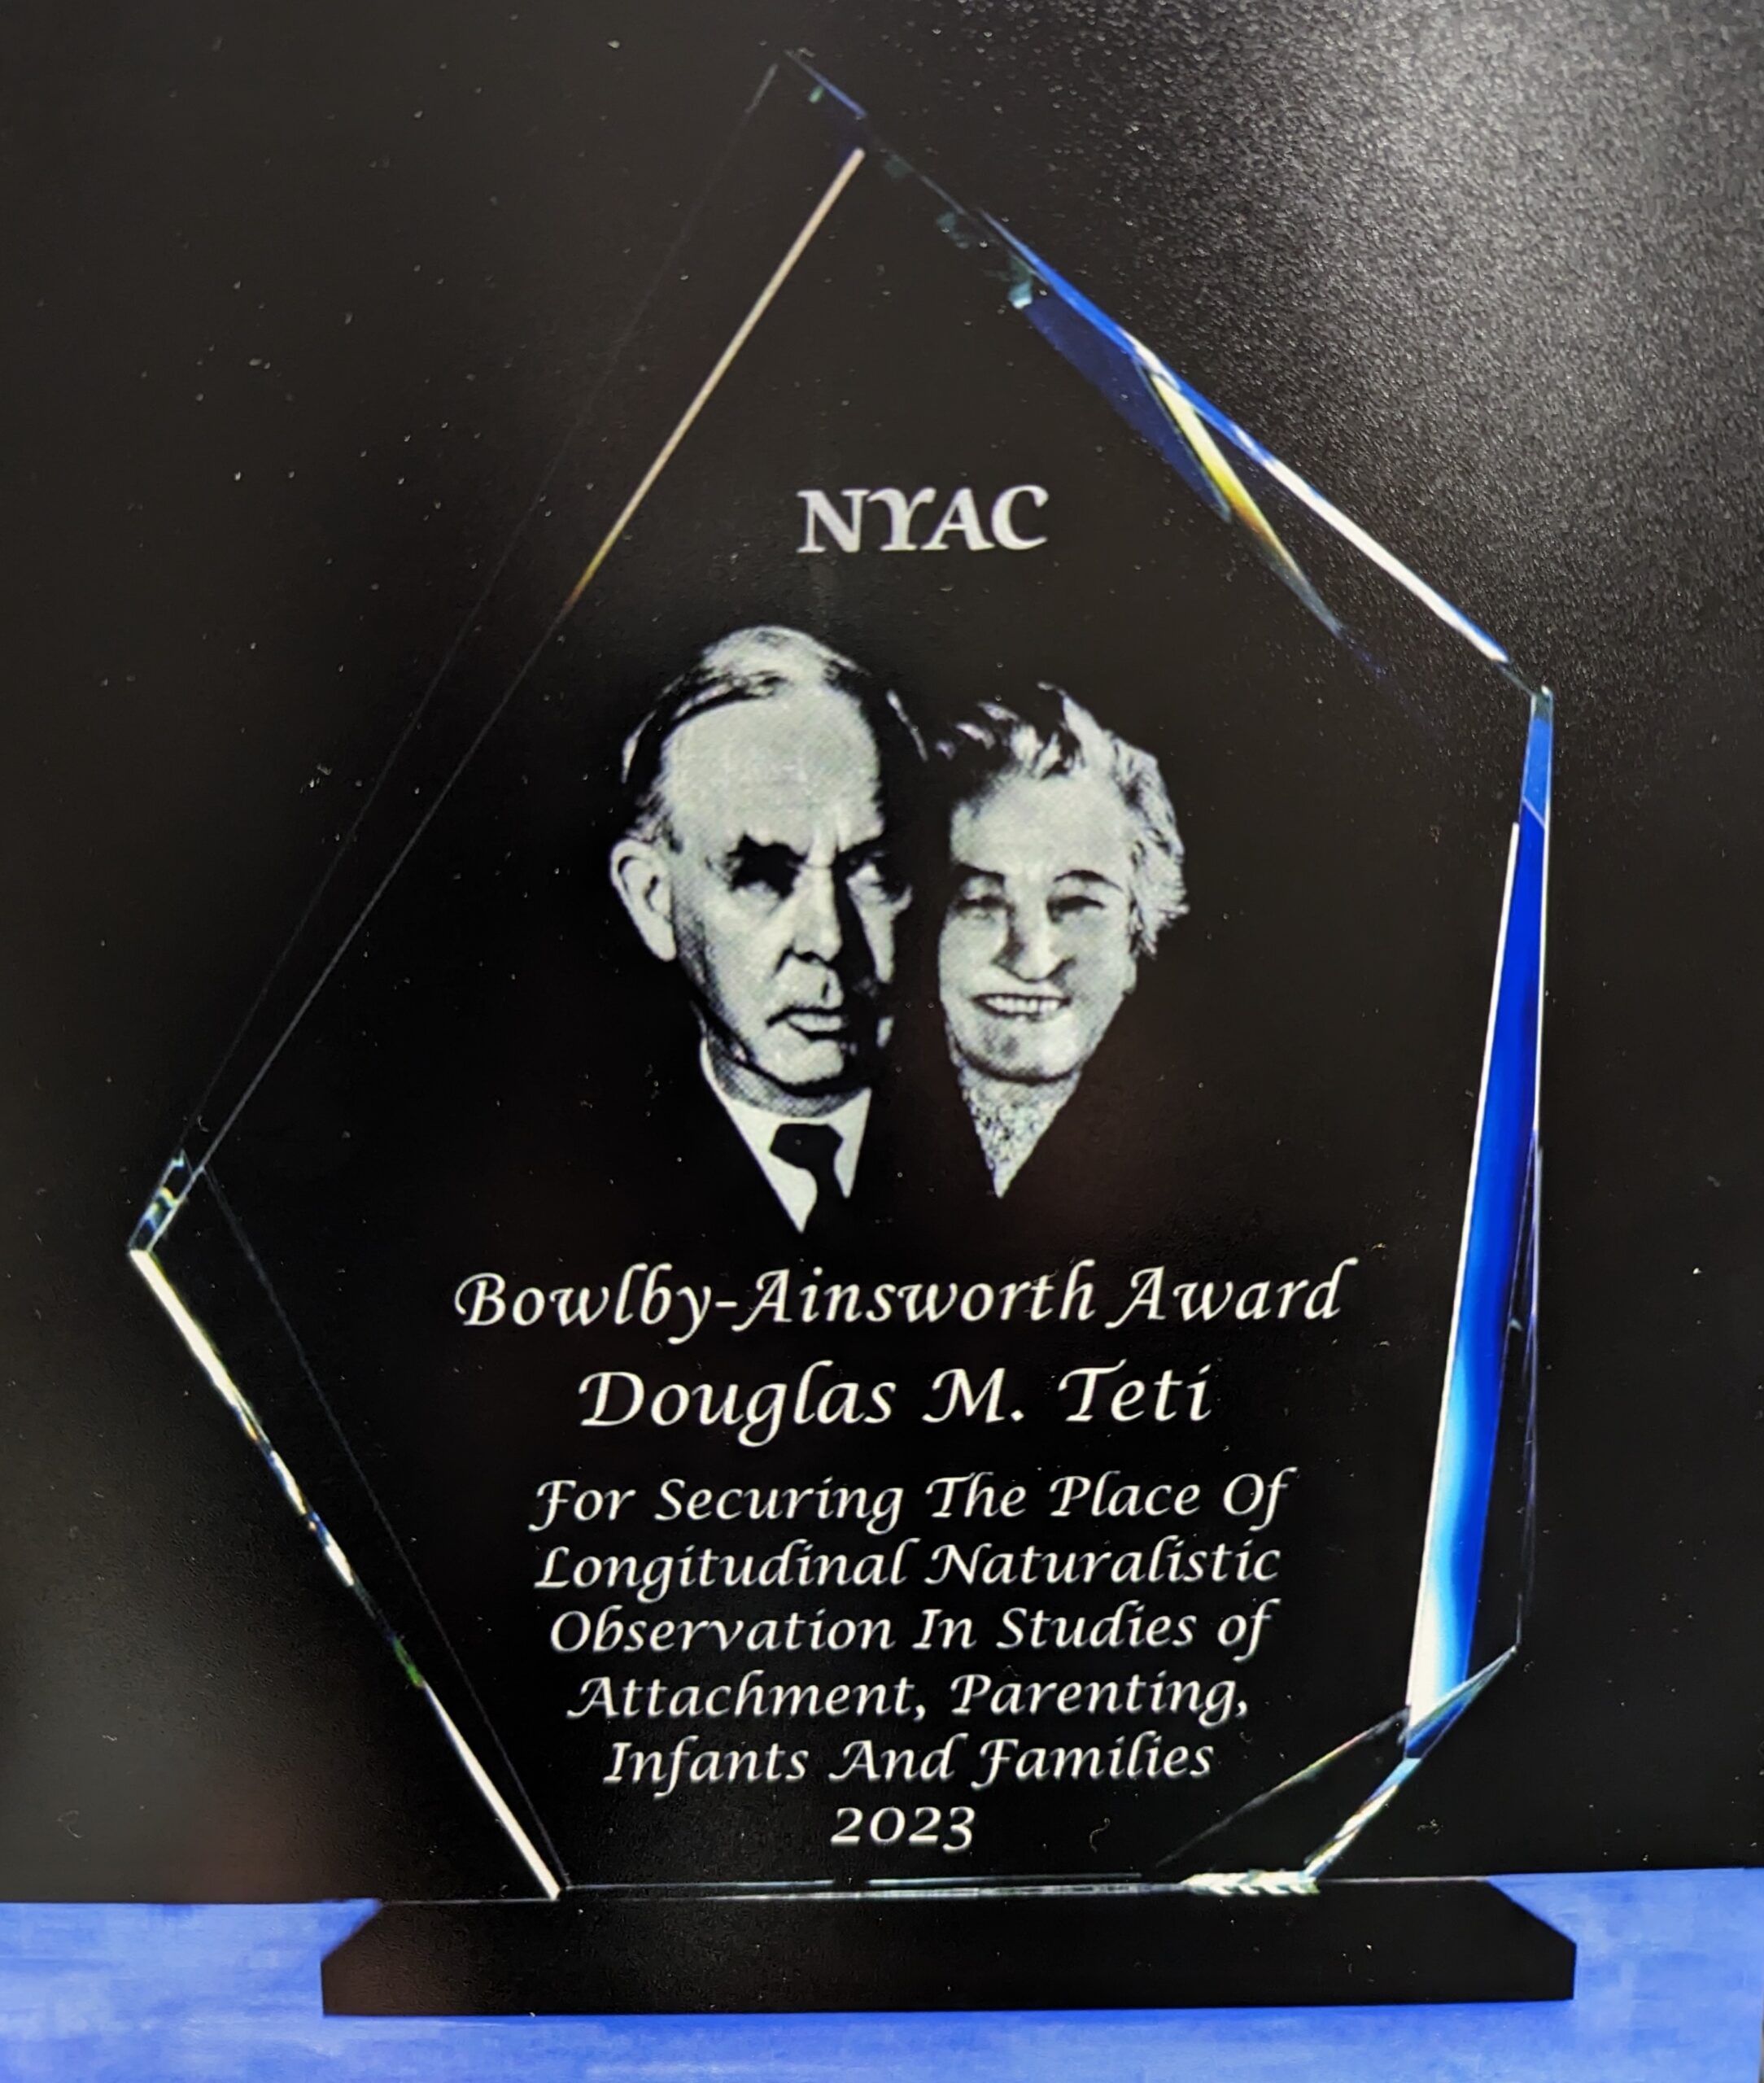 Bowlby-Ainsworth Award